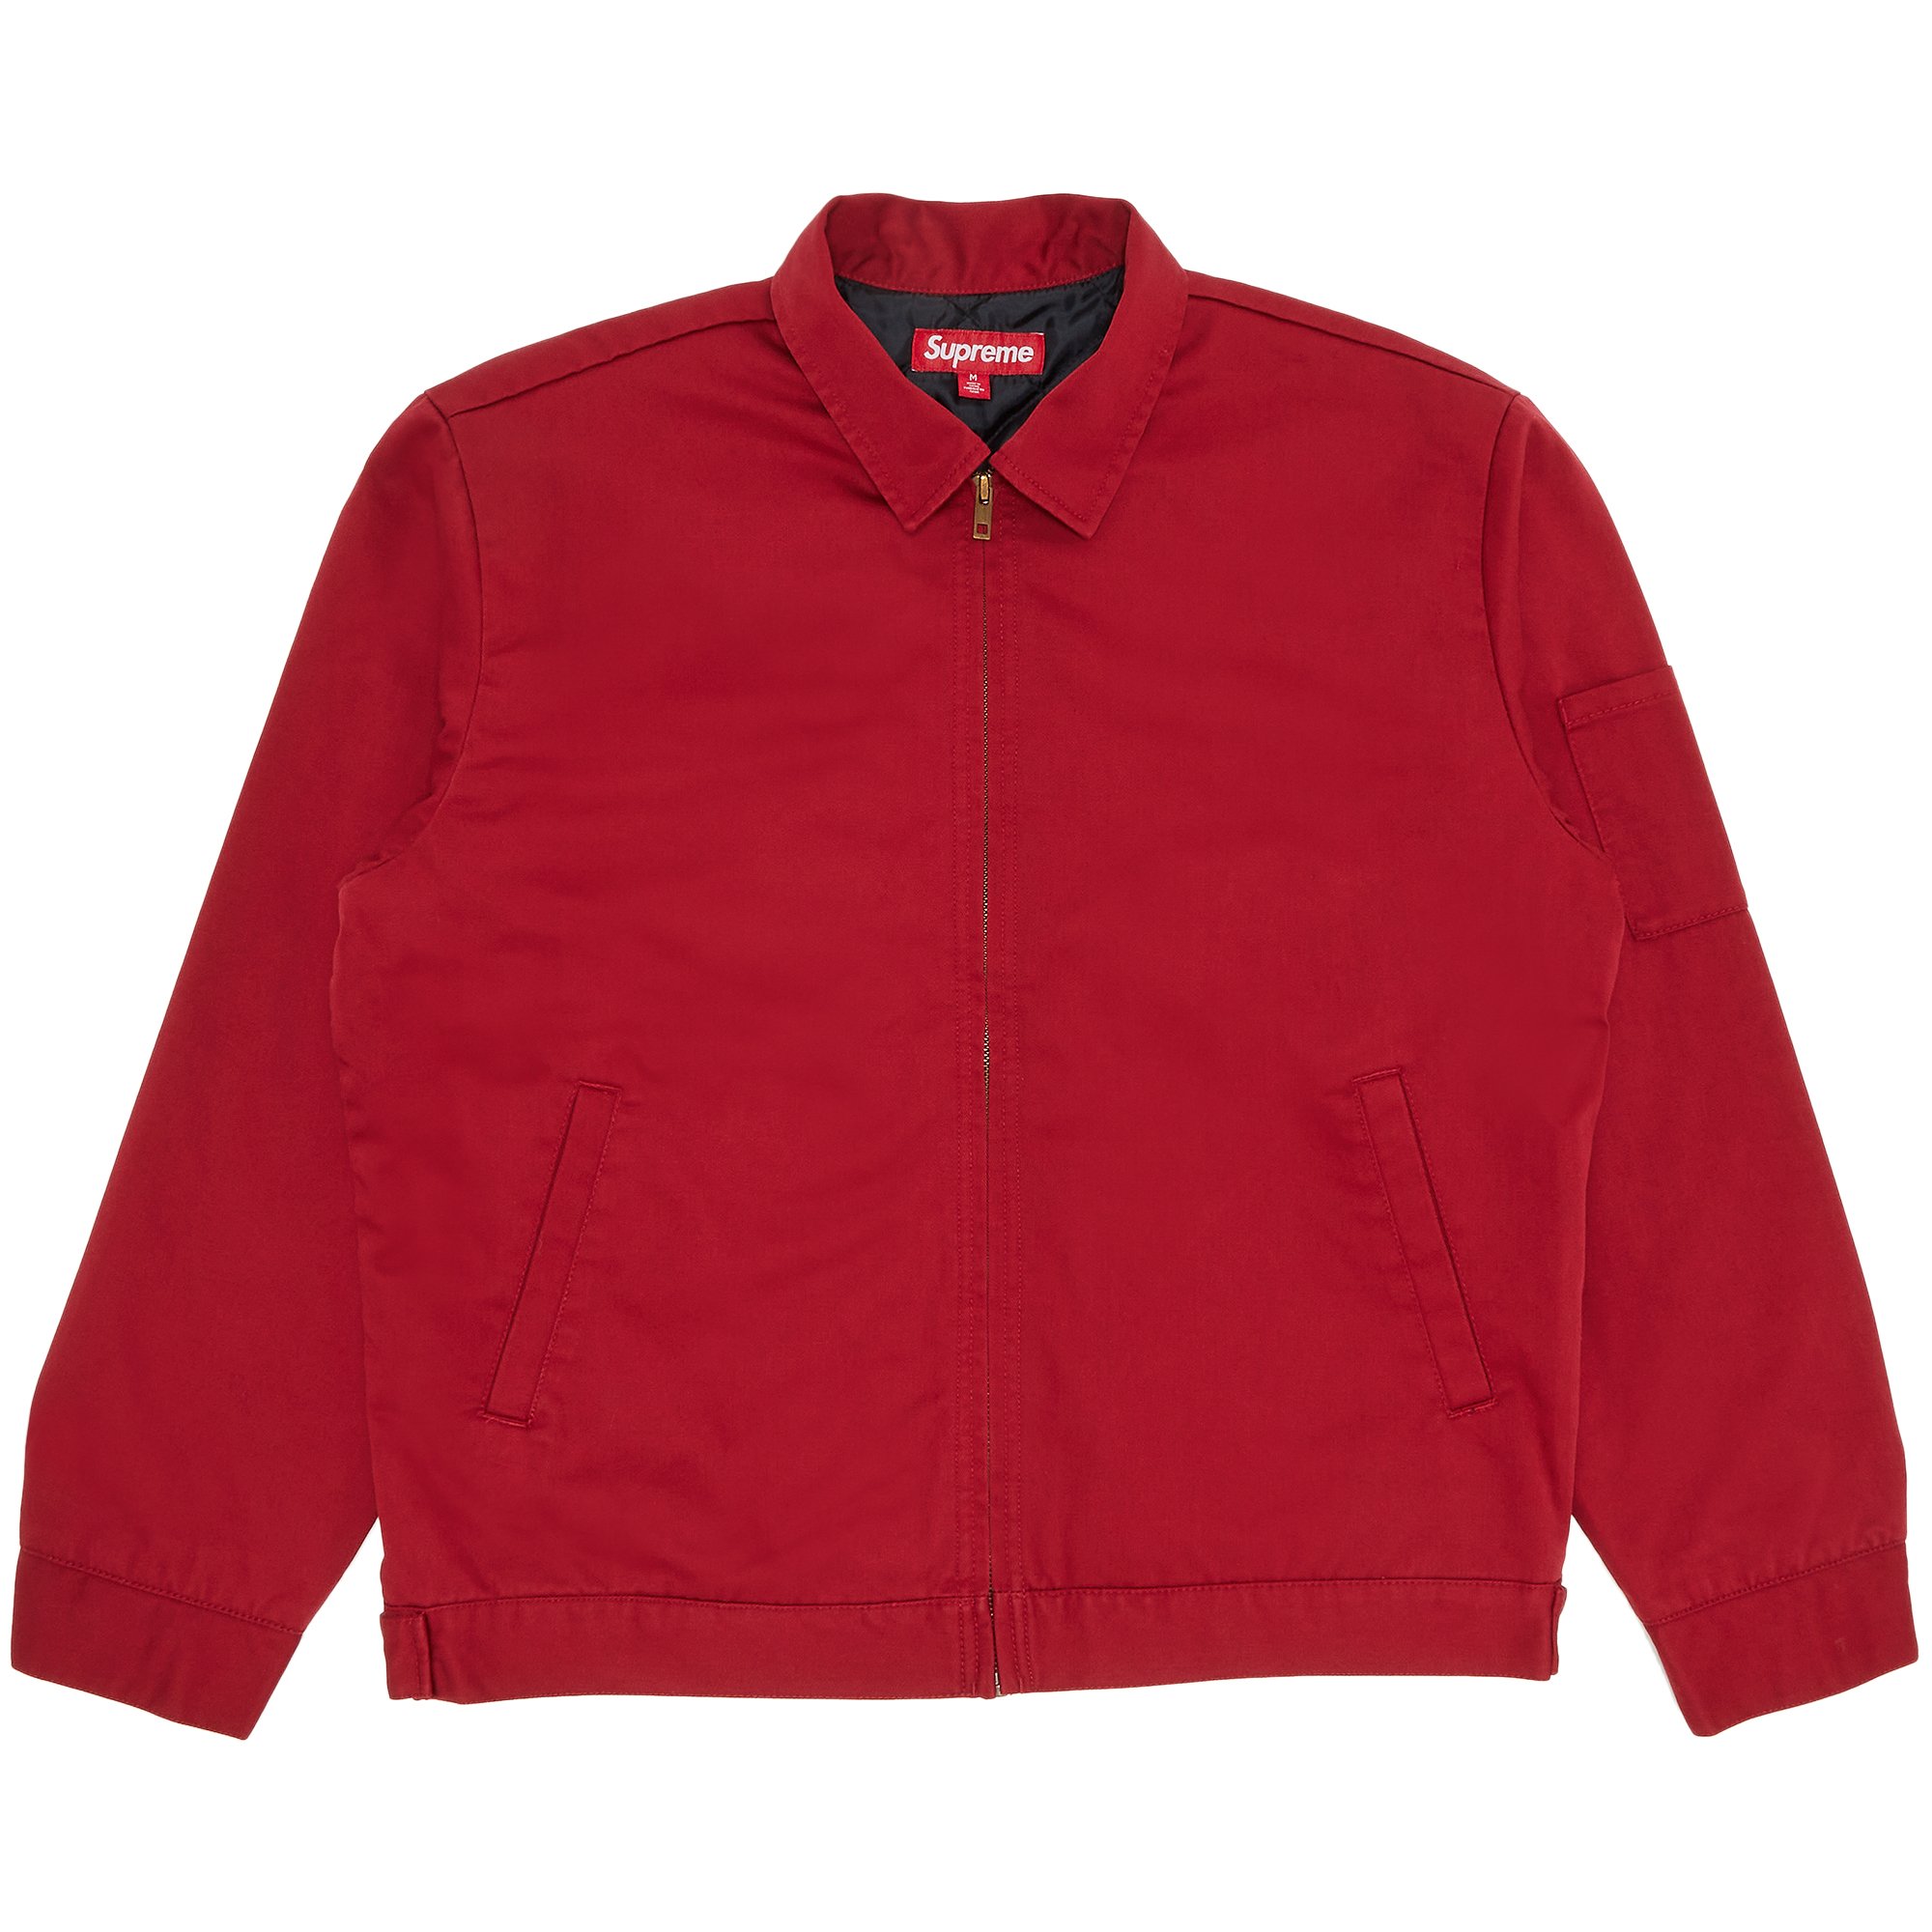 giger hr giger Рабочая куртка с вышивкой Supreme HR Giger, цвет красный